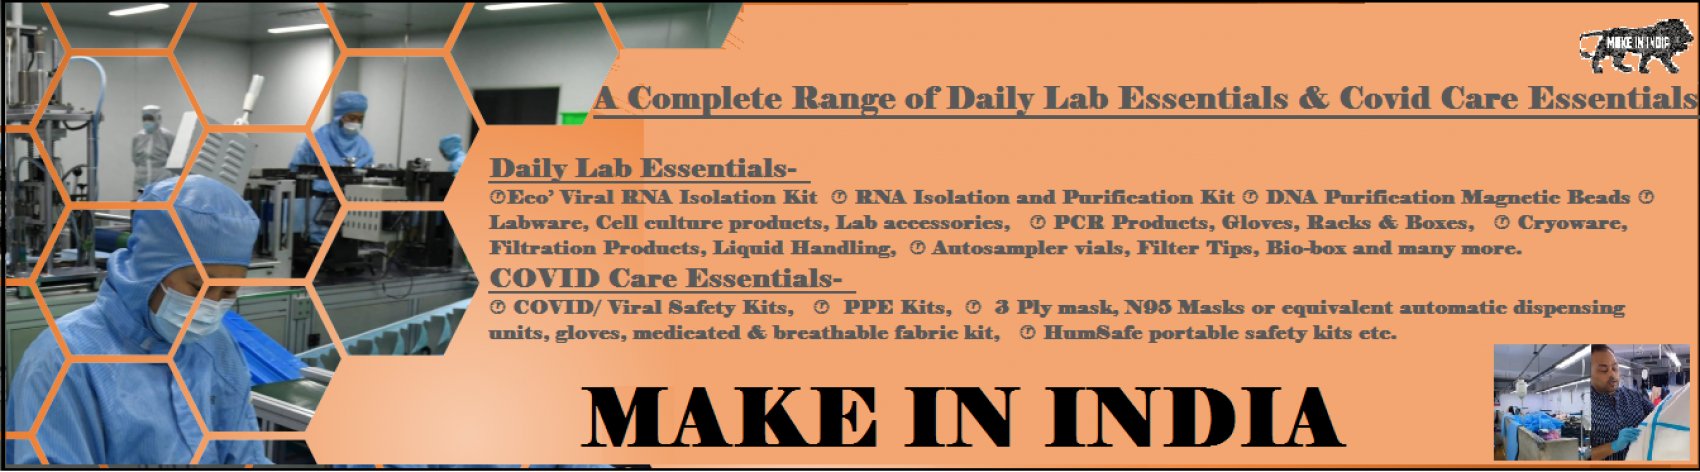 Daily Lab & Covid care essentials